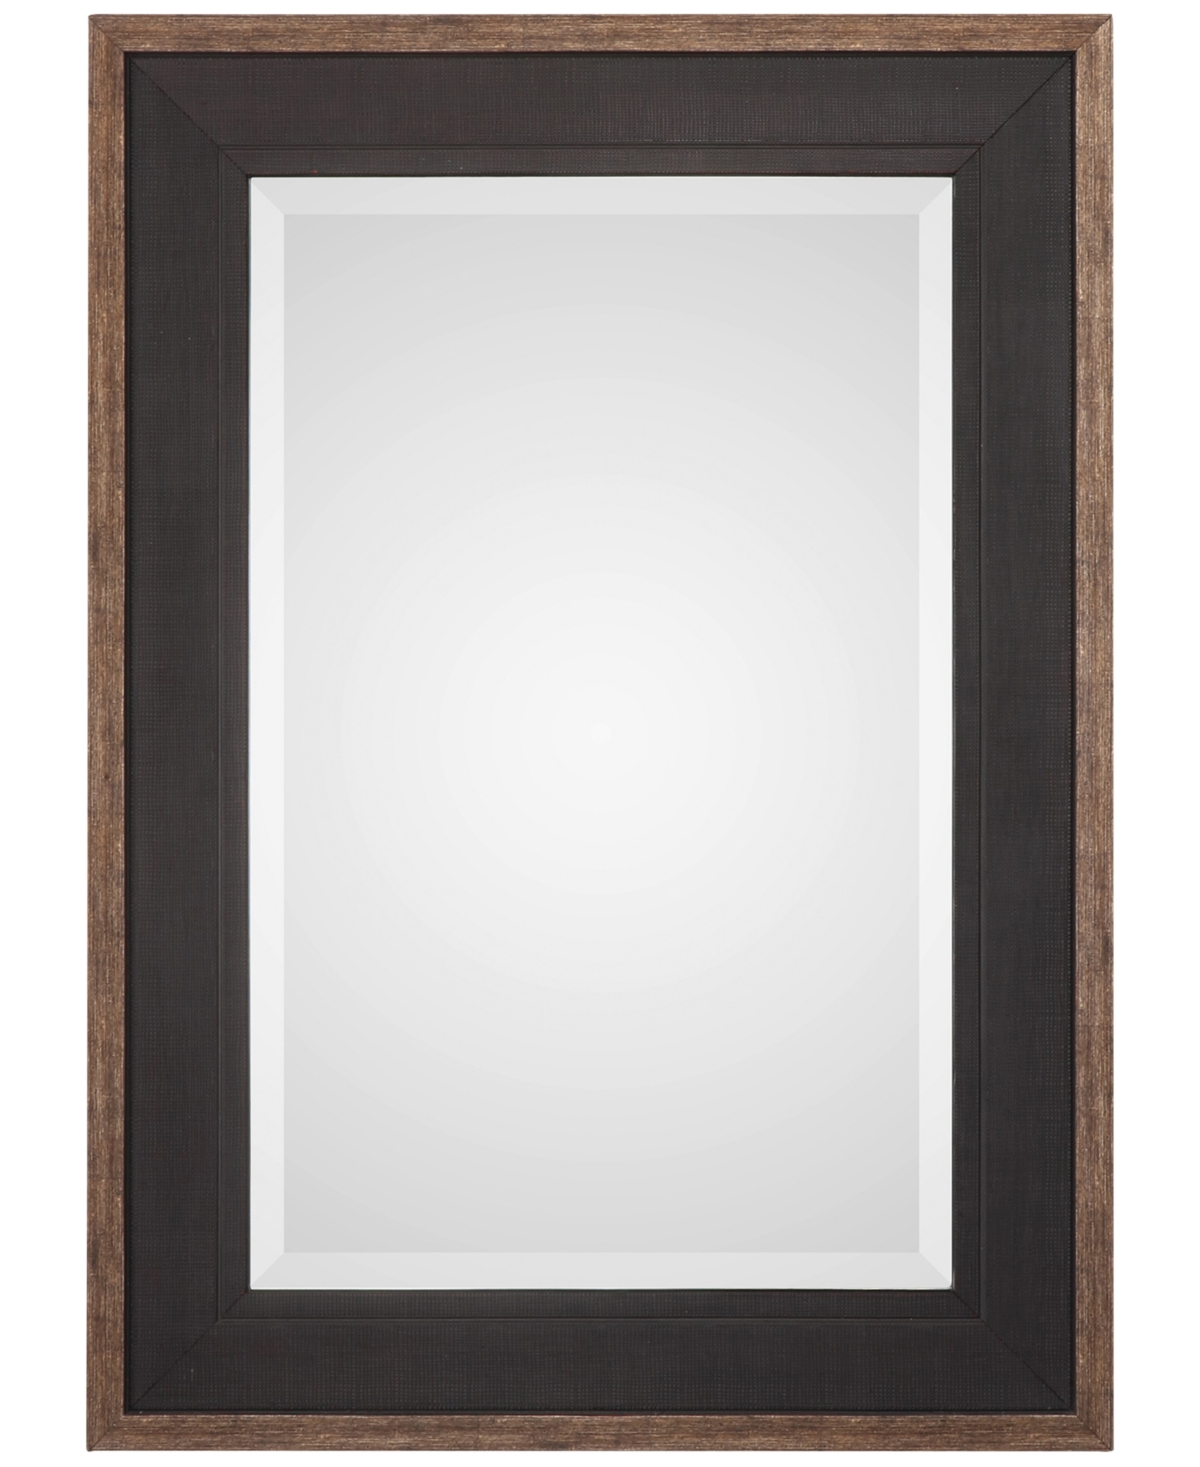 Staveley Rustic Black-Framed Mirror